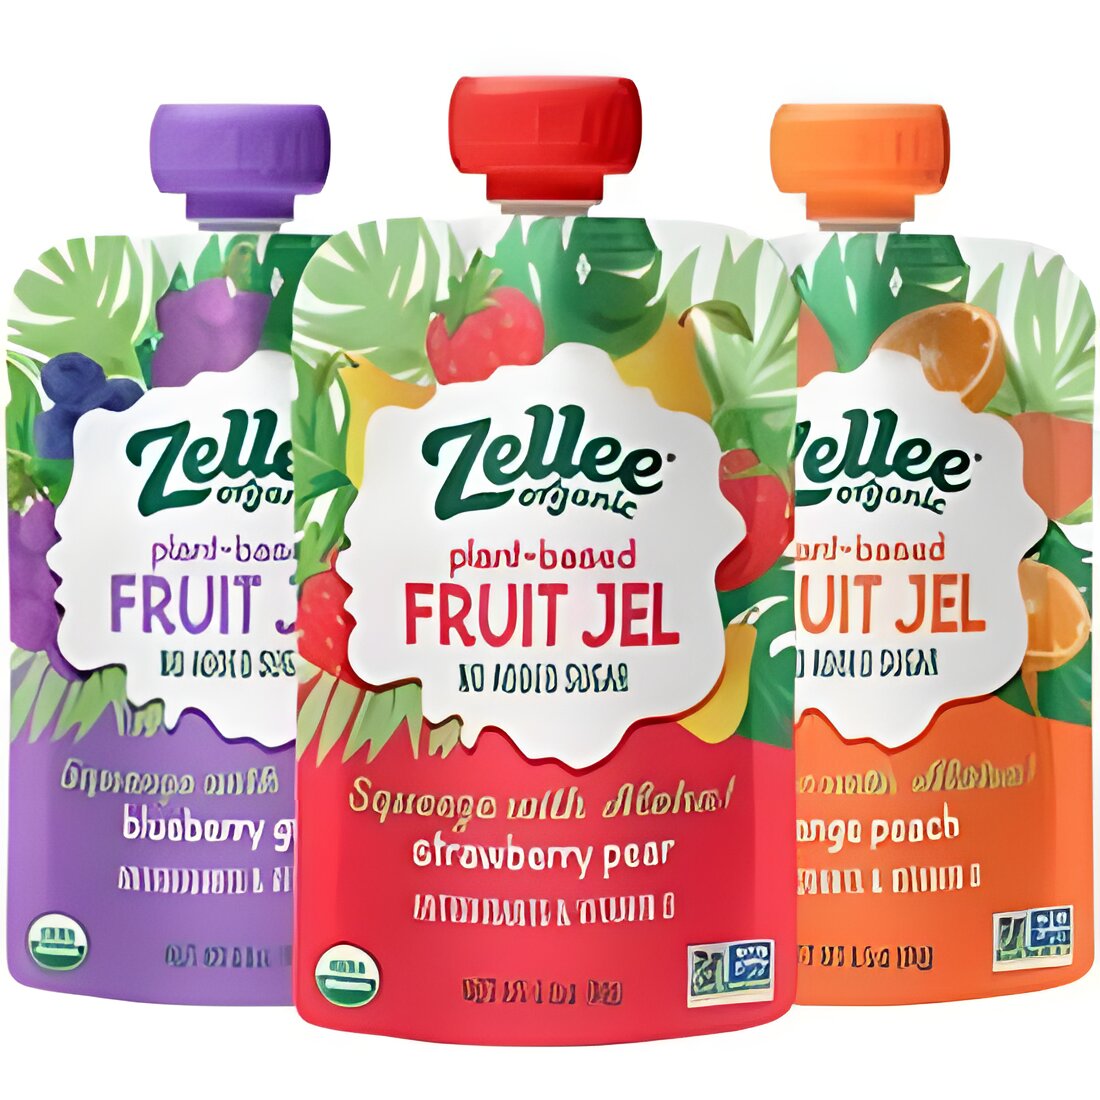 Free Zellee Plant-Based Fruit Jel